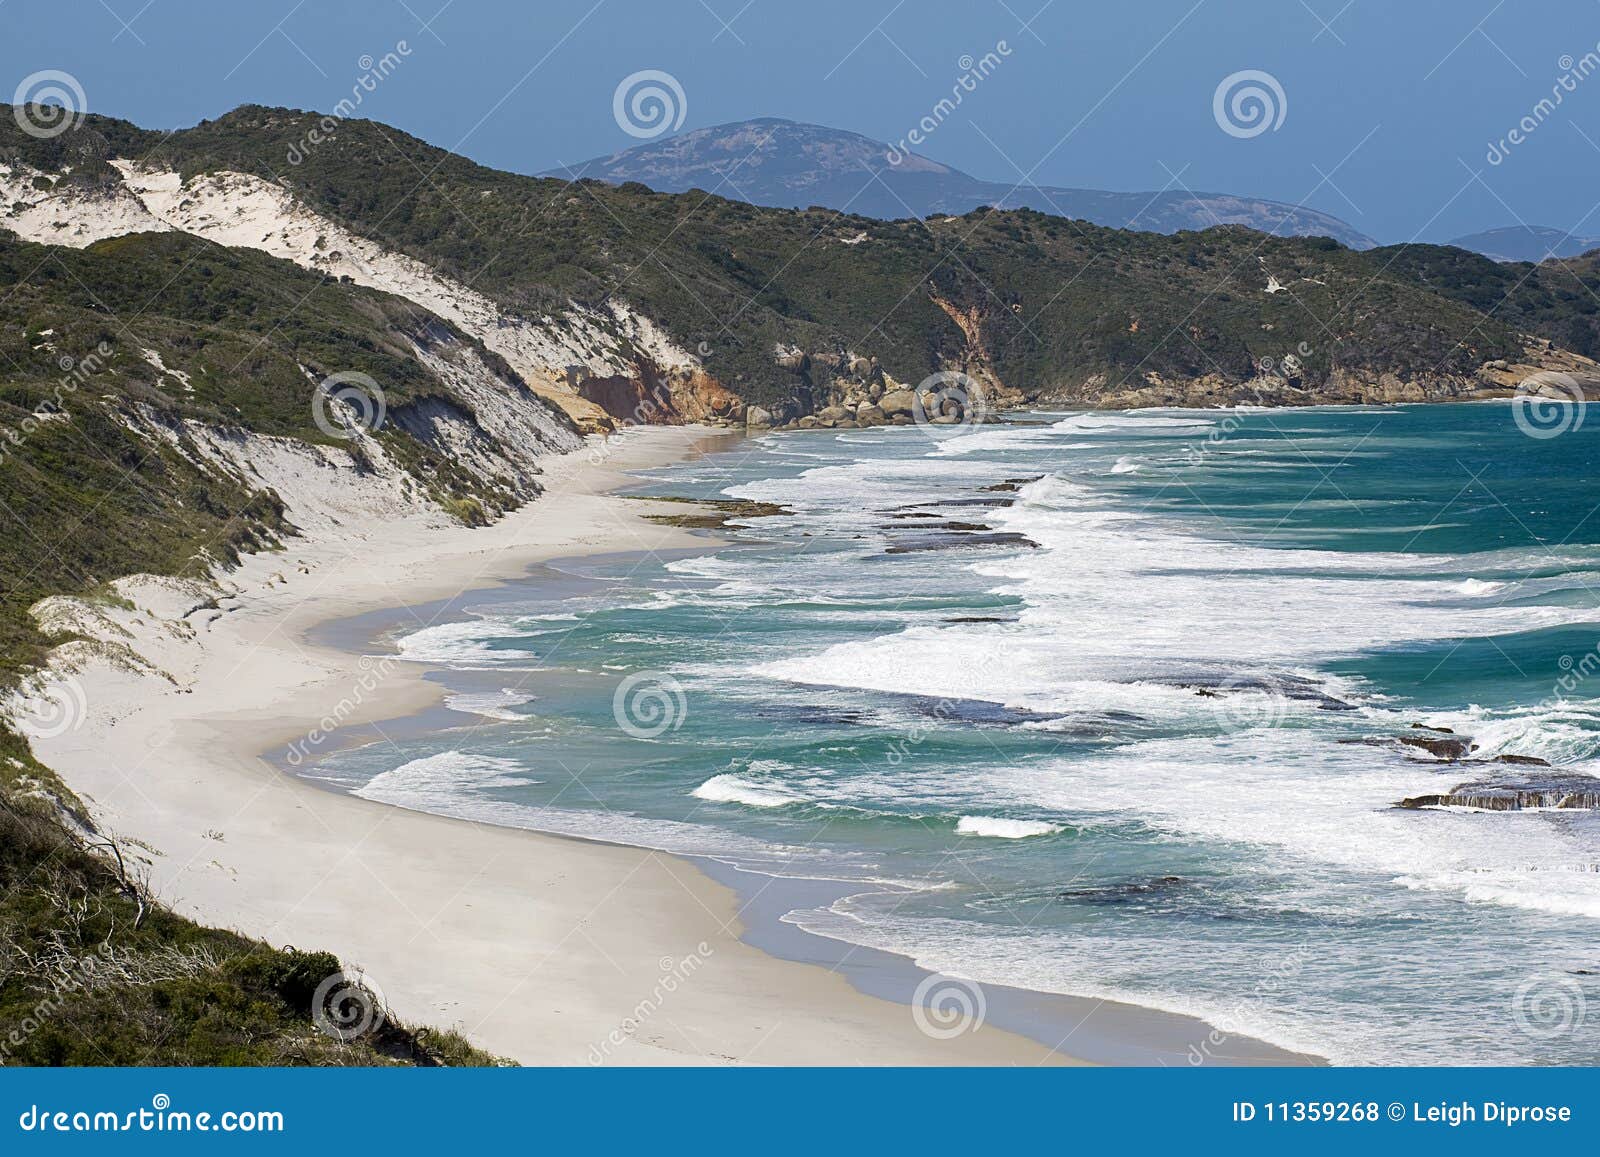 wild australian coastline